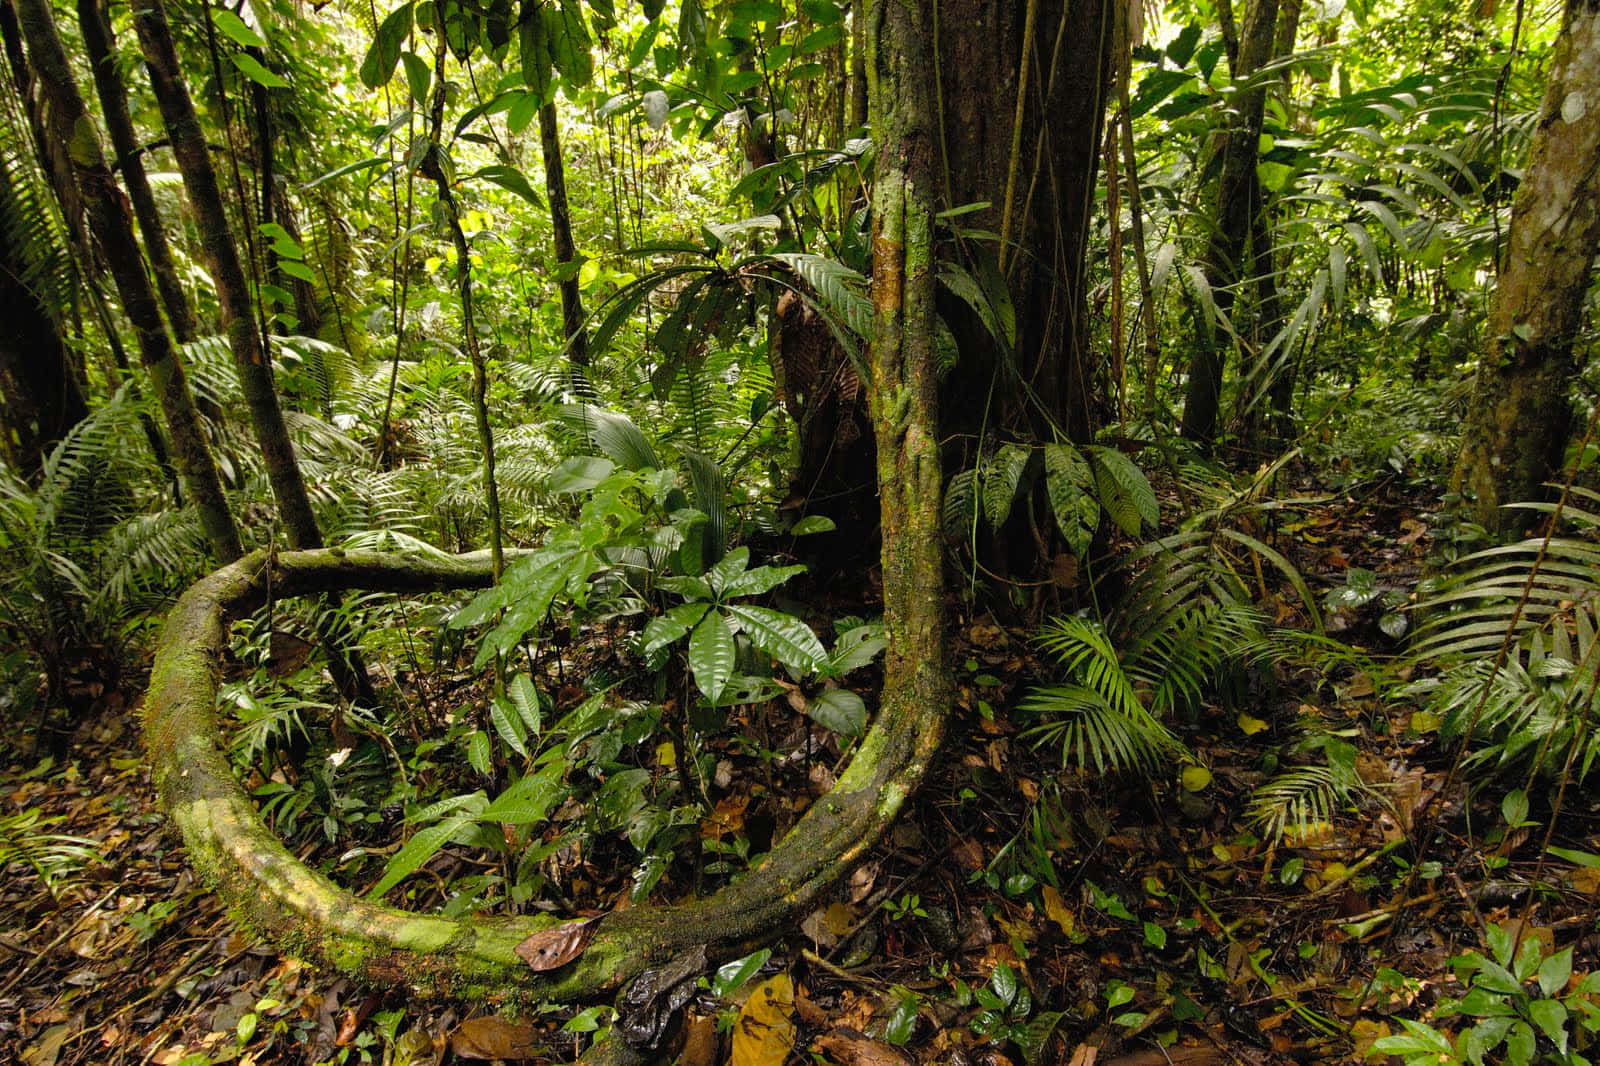 Explore the dense foliage of the Jungle